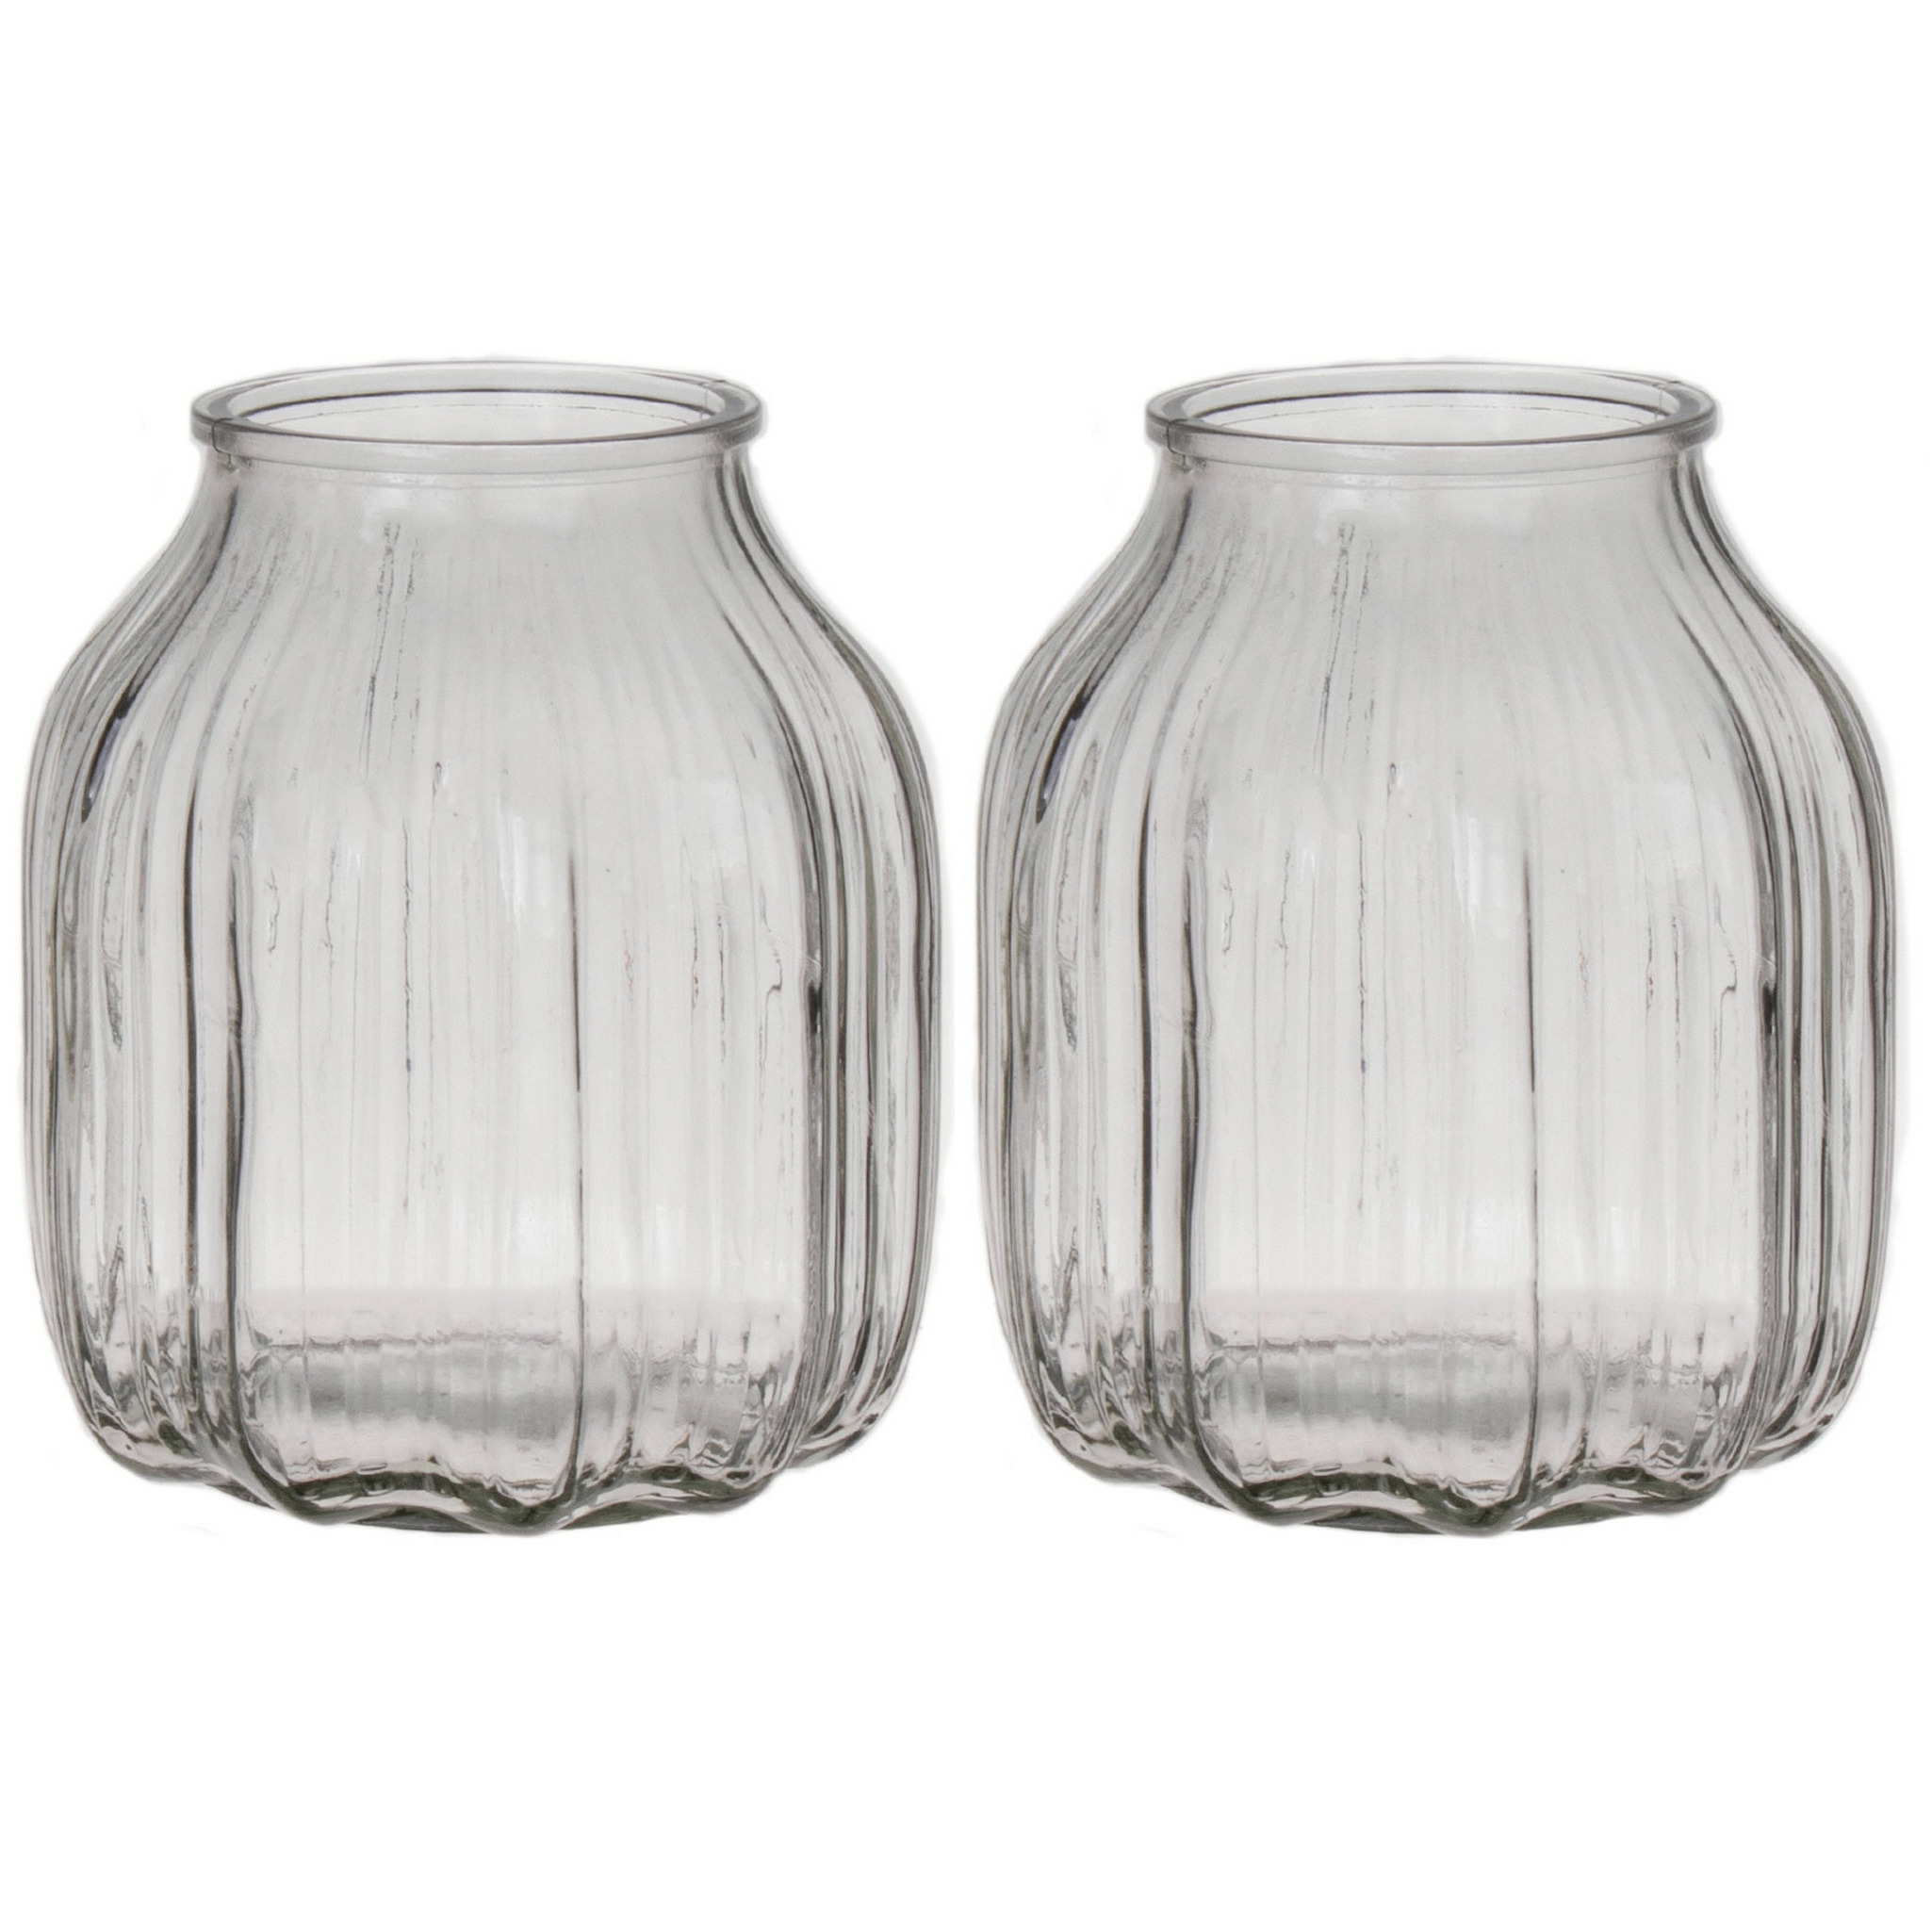 Bellatio Design Bloemenvaas klein - 2x - helder transparant glas - D14 x H16 cm - vaas